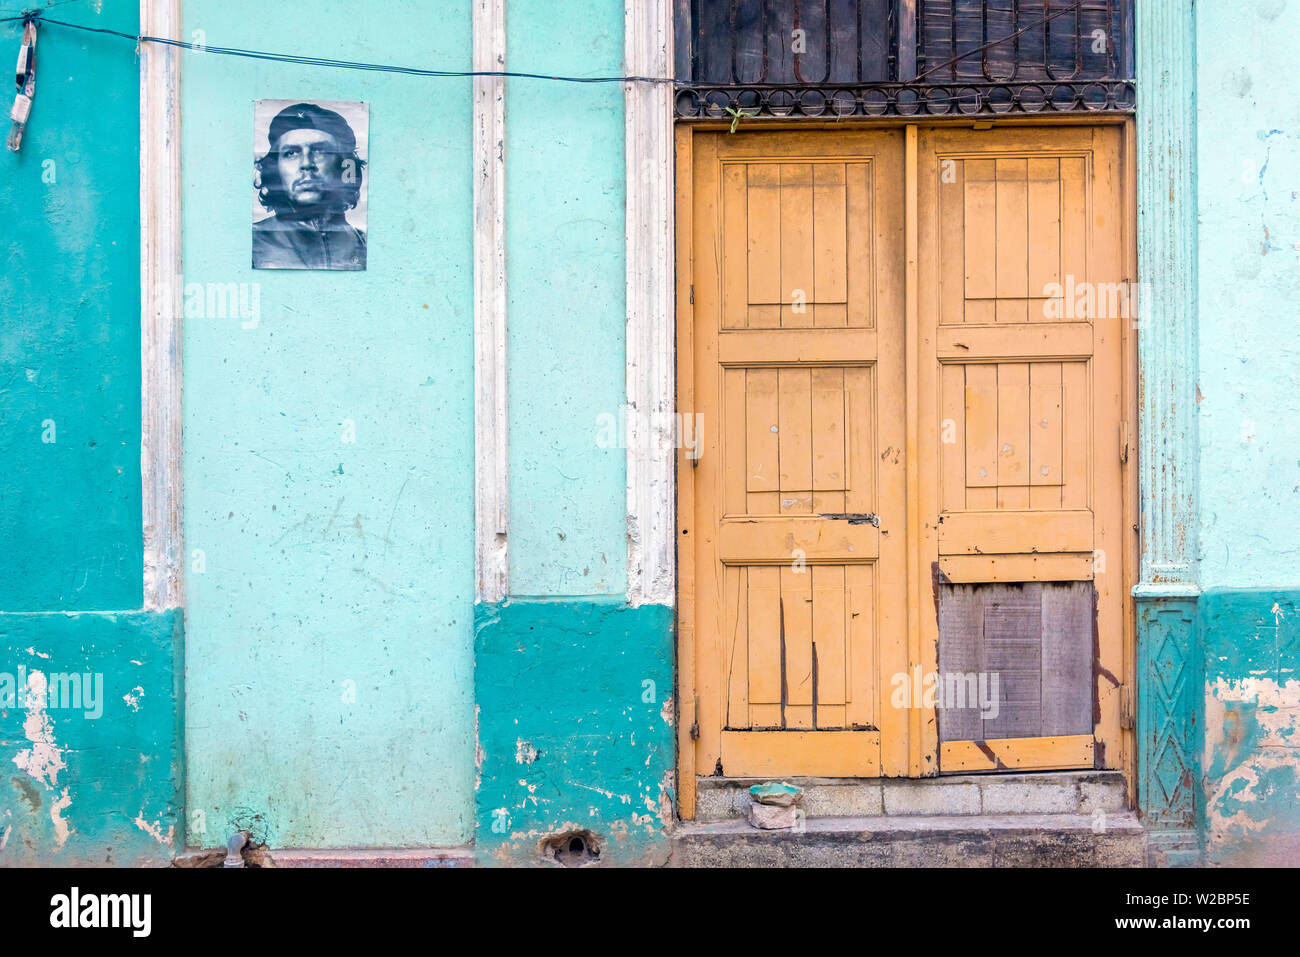 Cuba, Havana, Che Guevara photograph on building wall Stock Photo